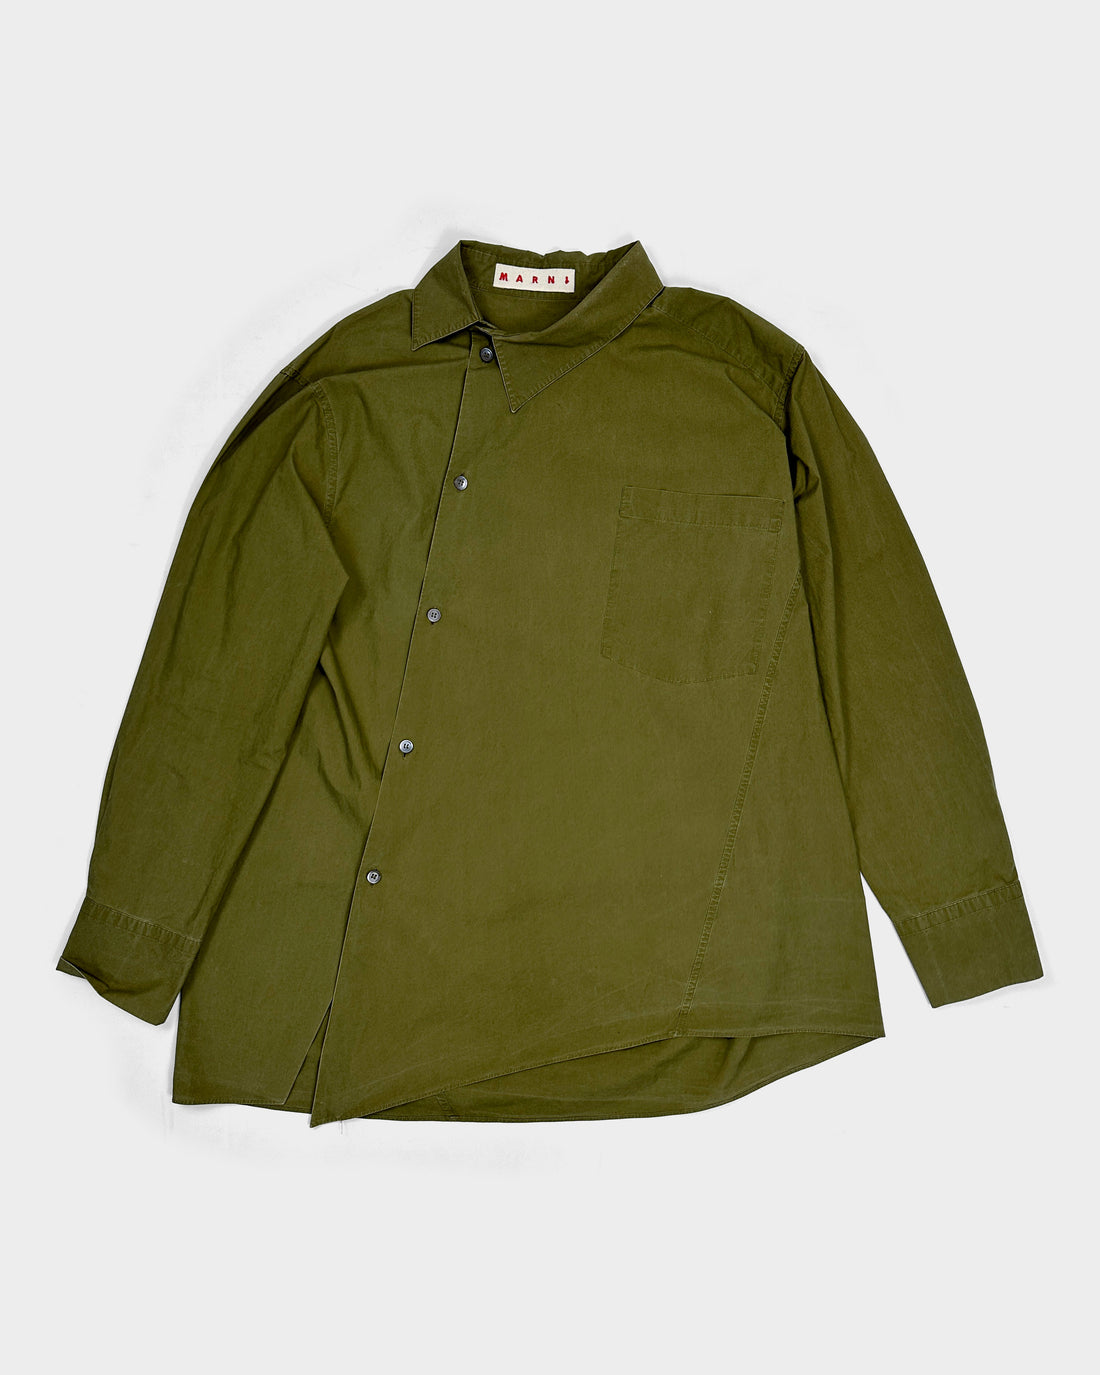 Marni Deep Green Asymmetric Shirt 2000's